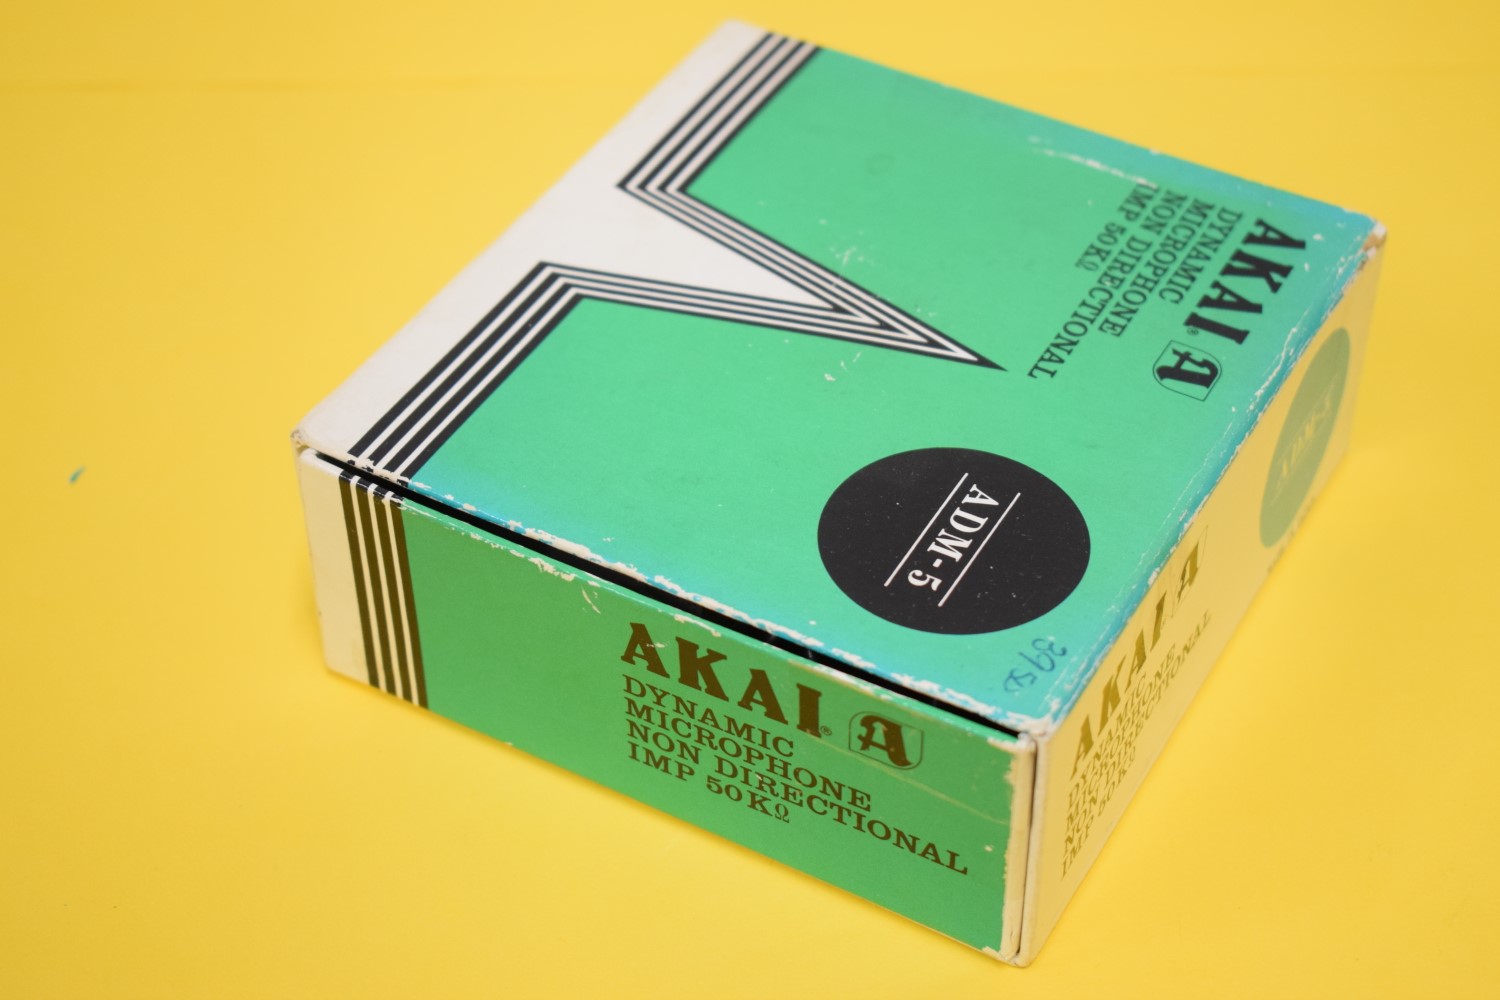 Akai ADM-5 Mikrofon – In Originale Verpackung